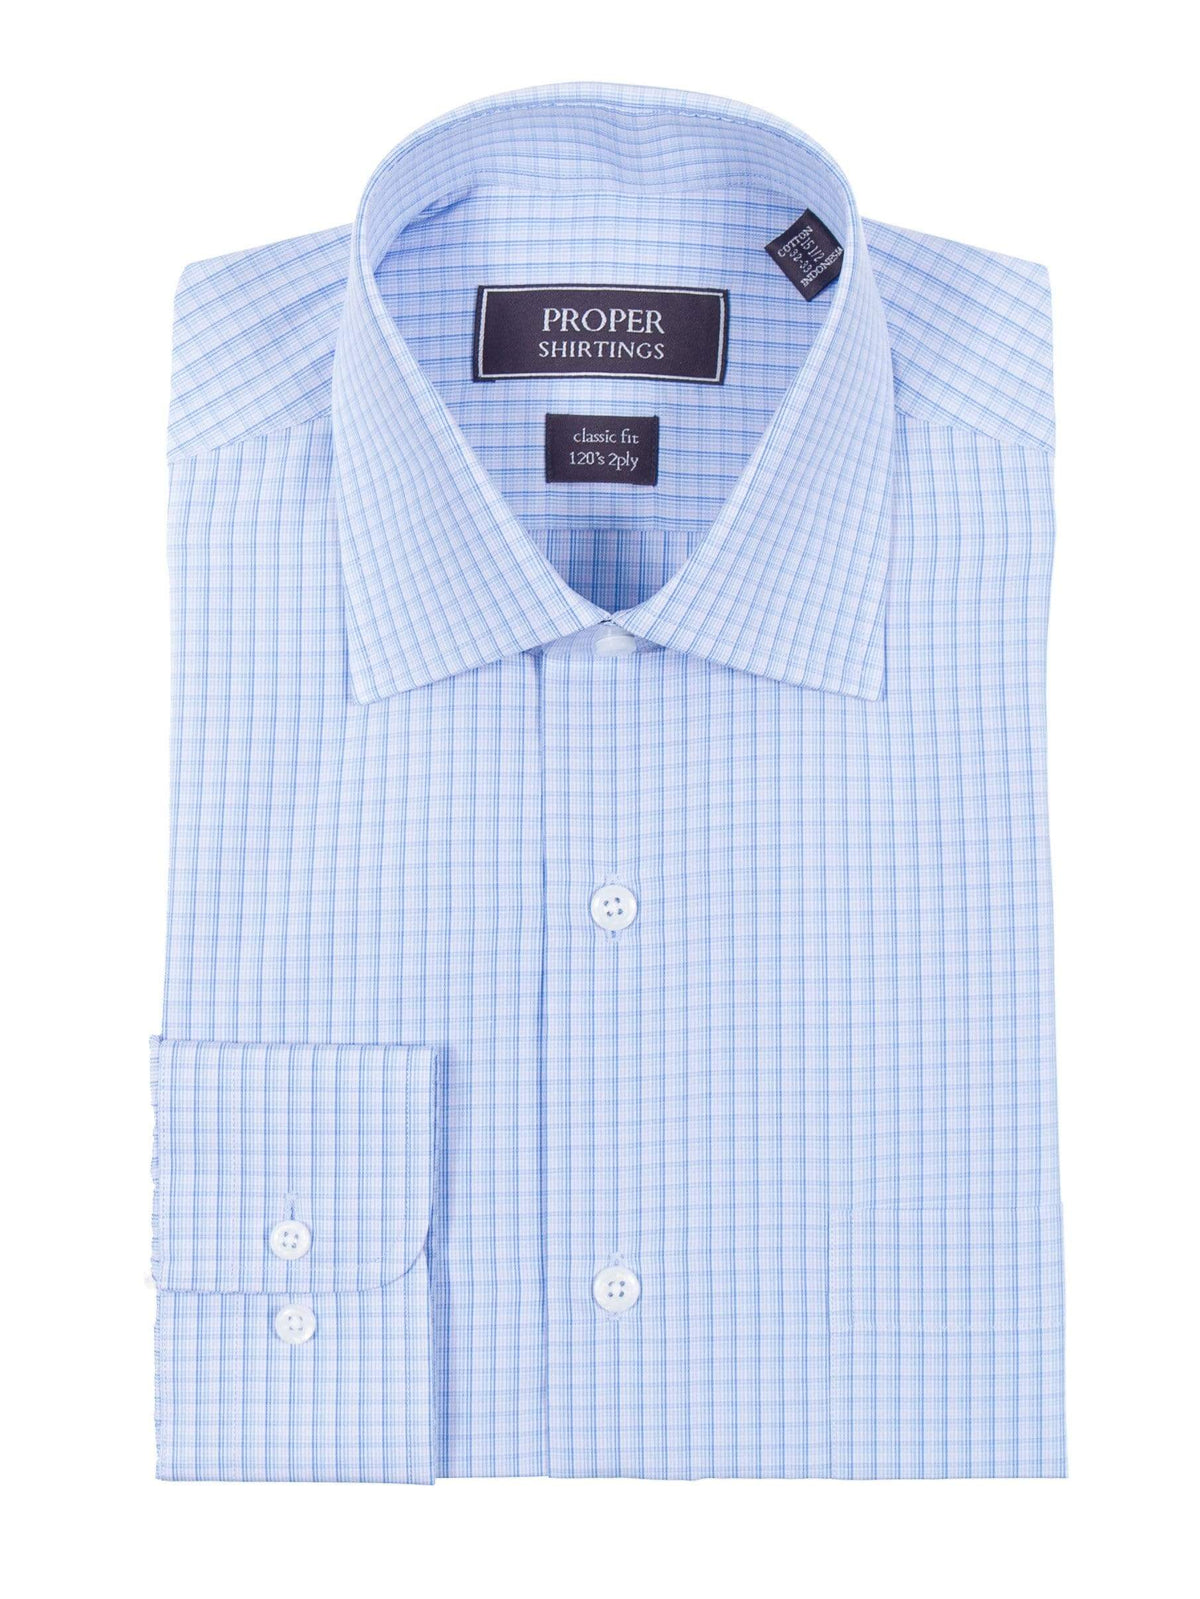 Proper Shirtings SHIRTS 15 32/33 Classic Fit Blue &amp; Subtle Pink Check 120&#39;s 2Ply Cotton Dress Shirt